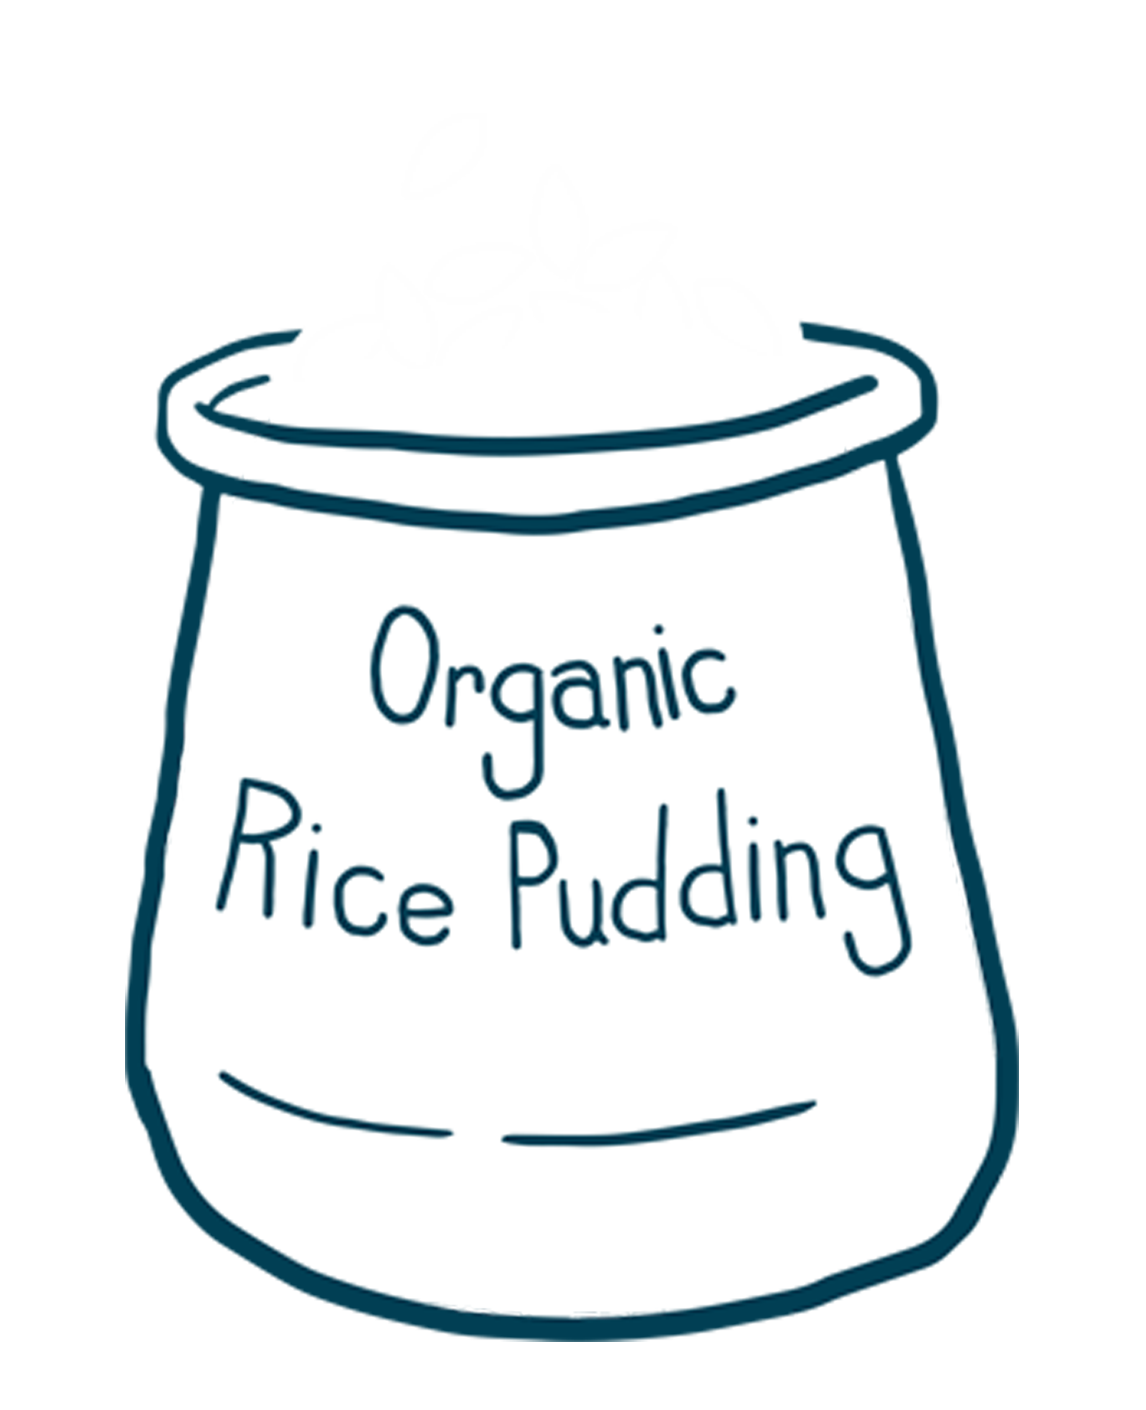 Yogurt clipart pudding. Petitpot french rice pack